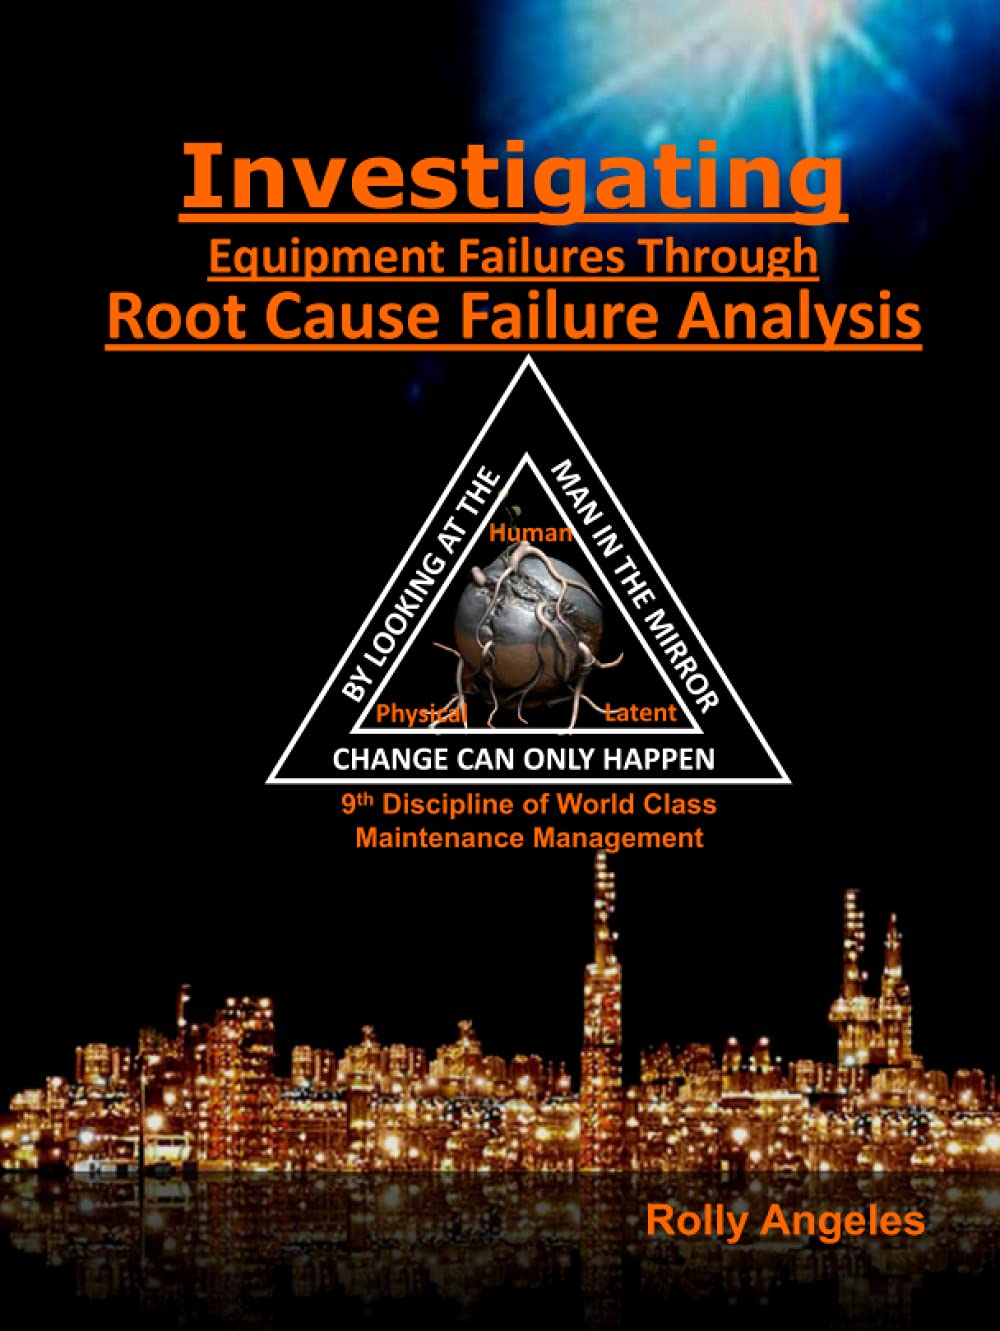 Investigating Equipment Failures Through Root Cause Failure Analysis: 9th Discipline on World Class Maintenance Management